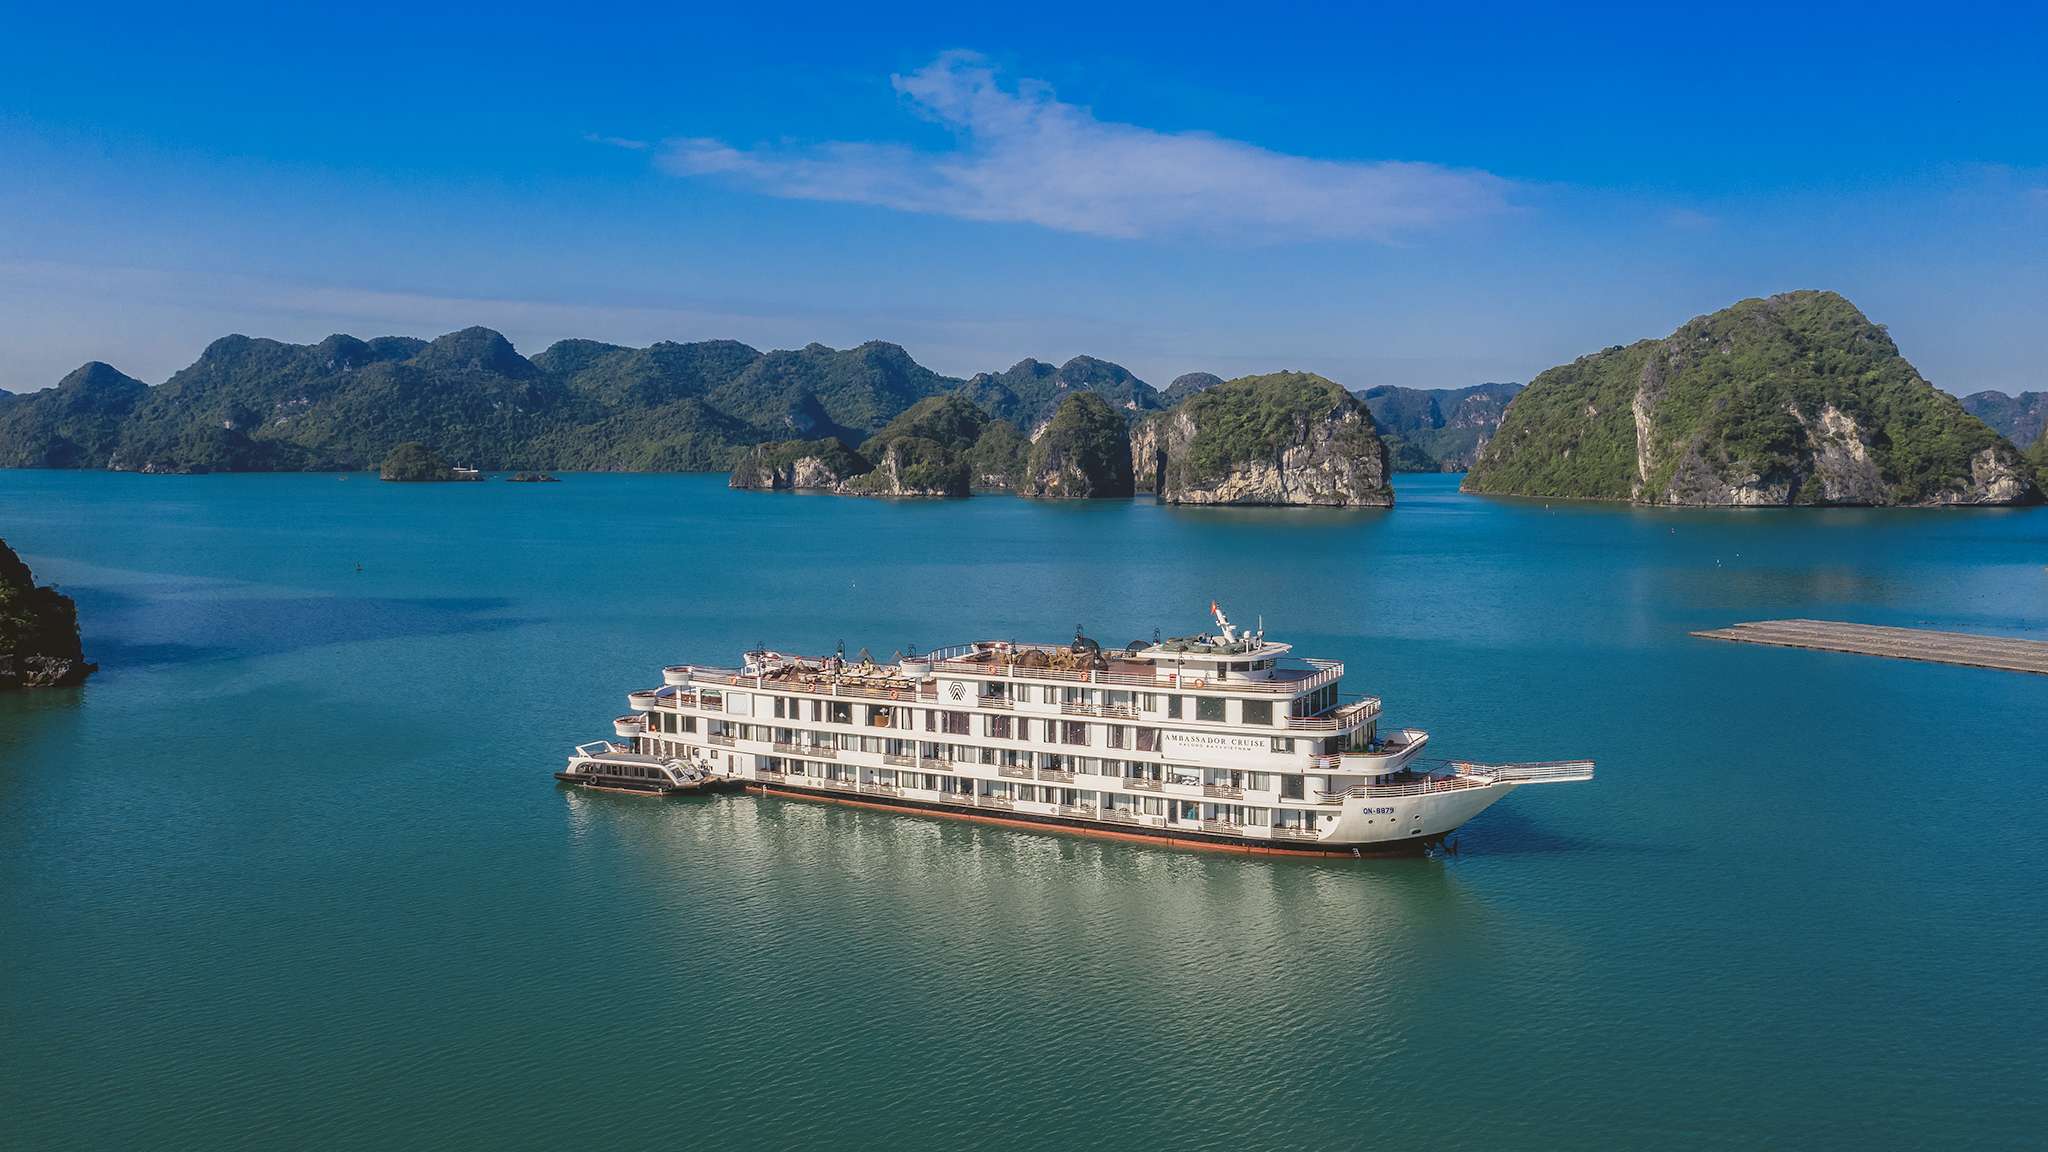 halong bay cruise booking.com